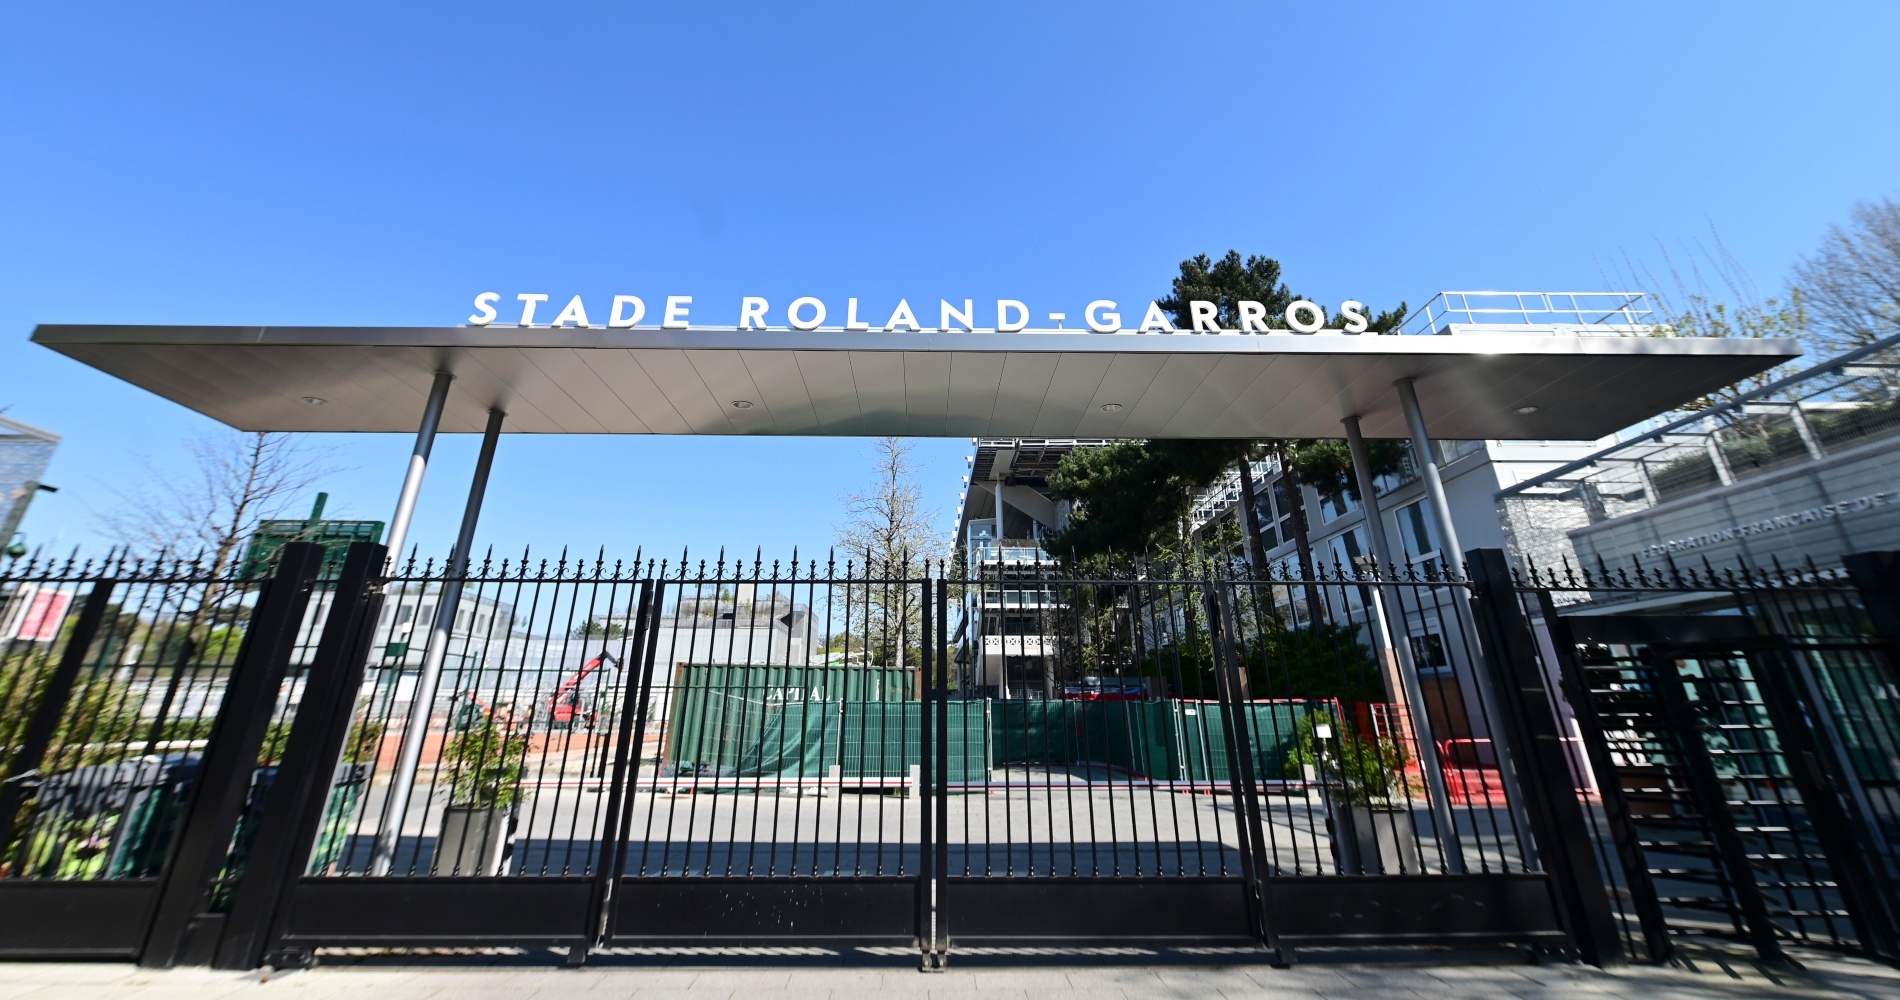 Roland-Garros' entry